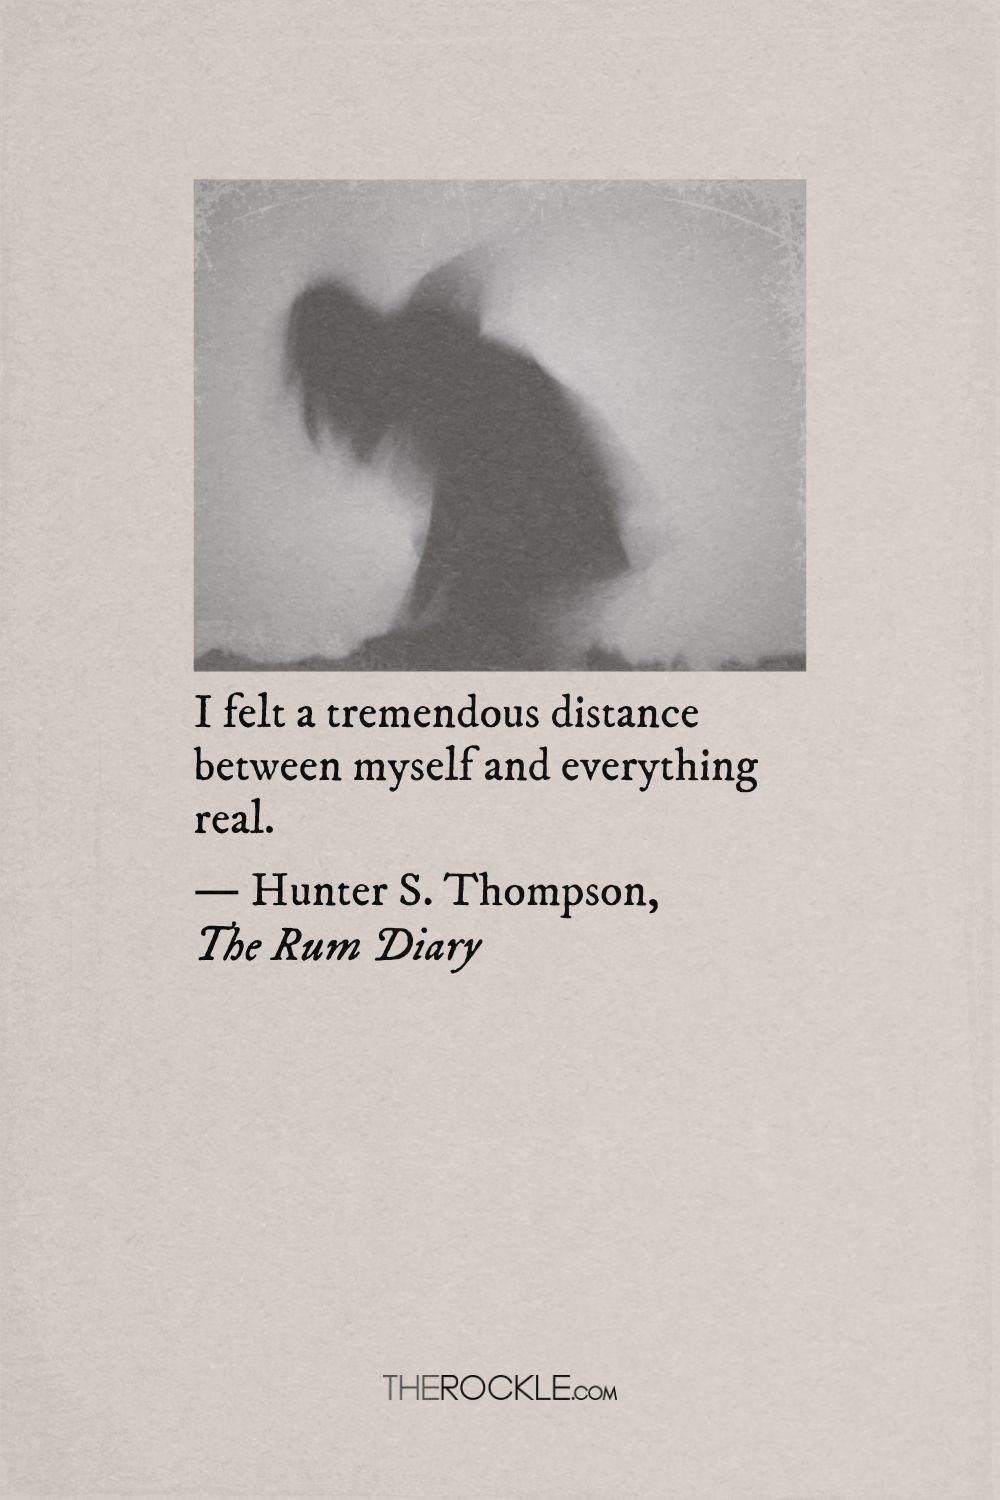 Hunter S. Thompson's quote on alienation 